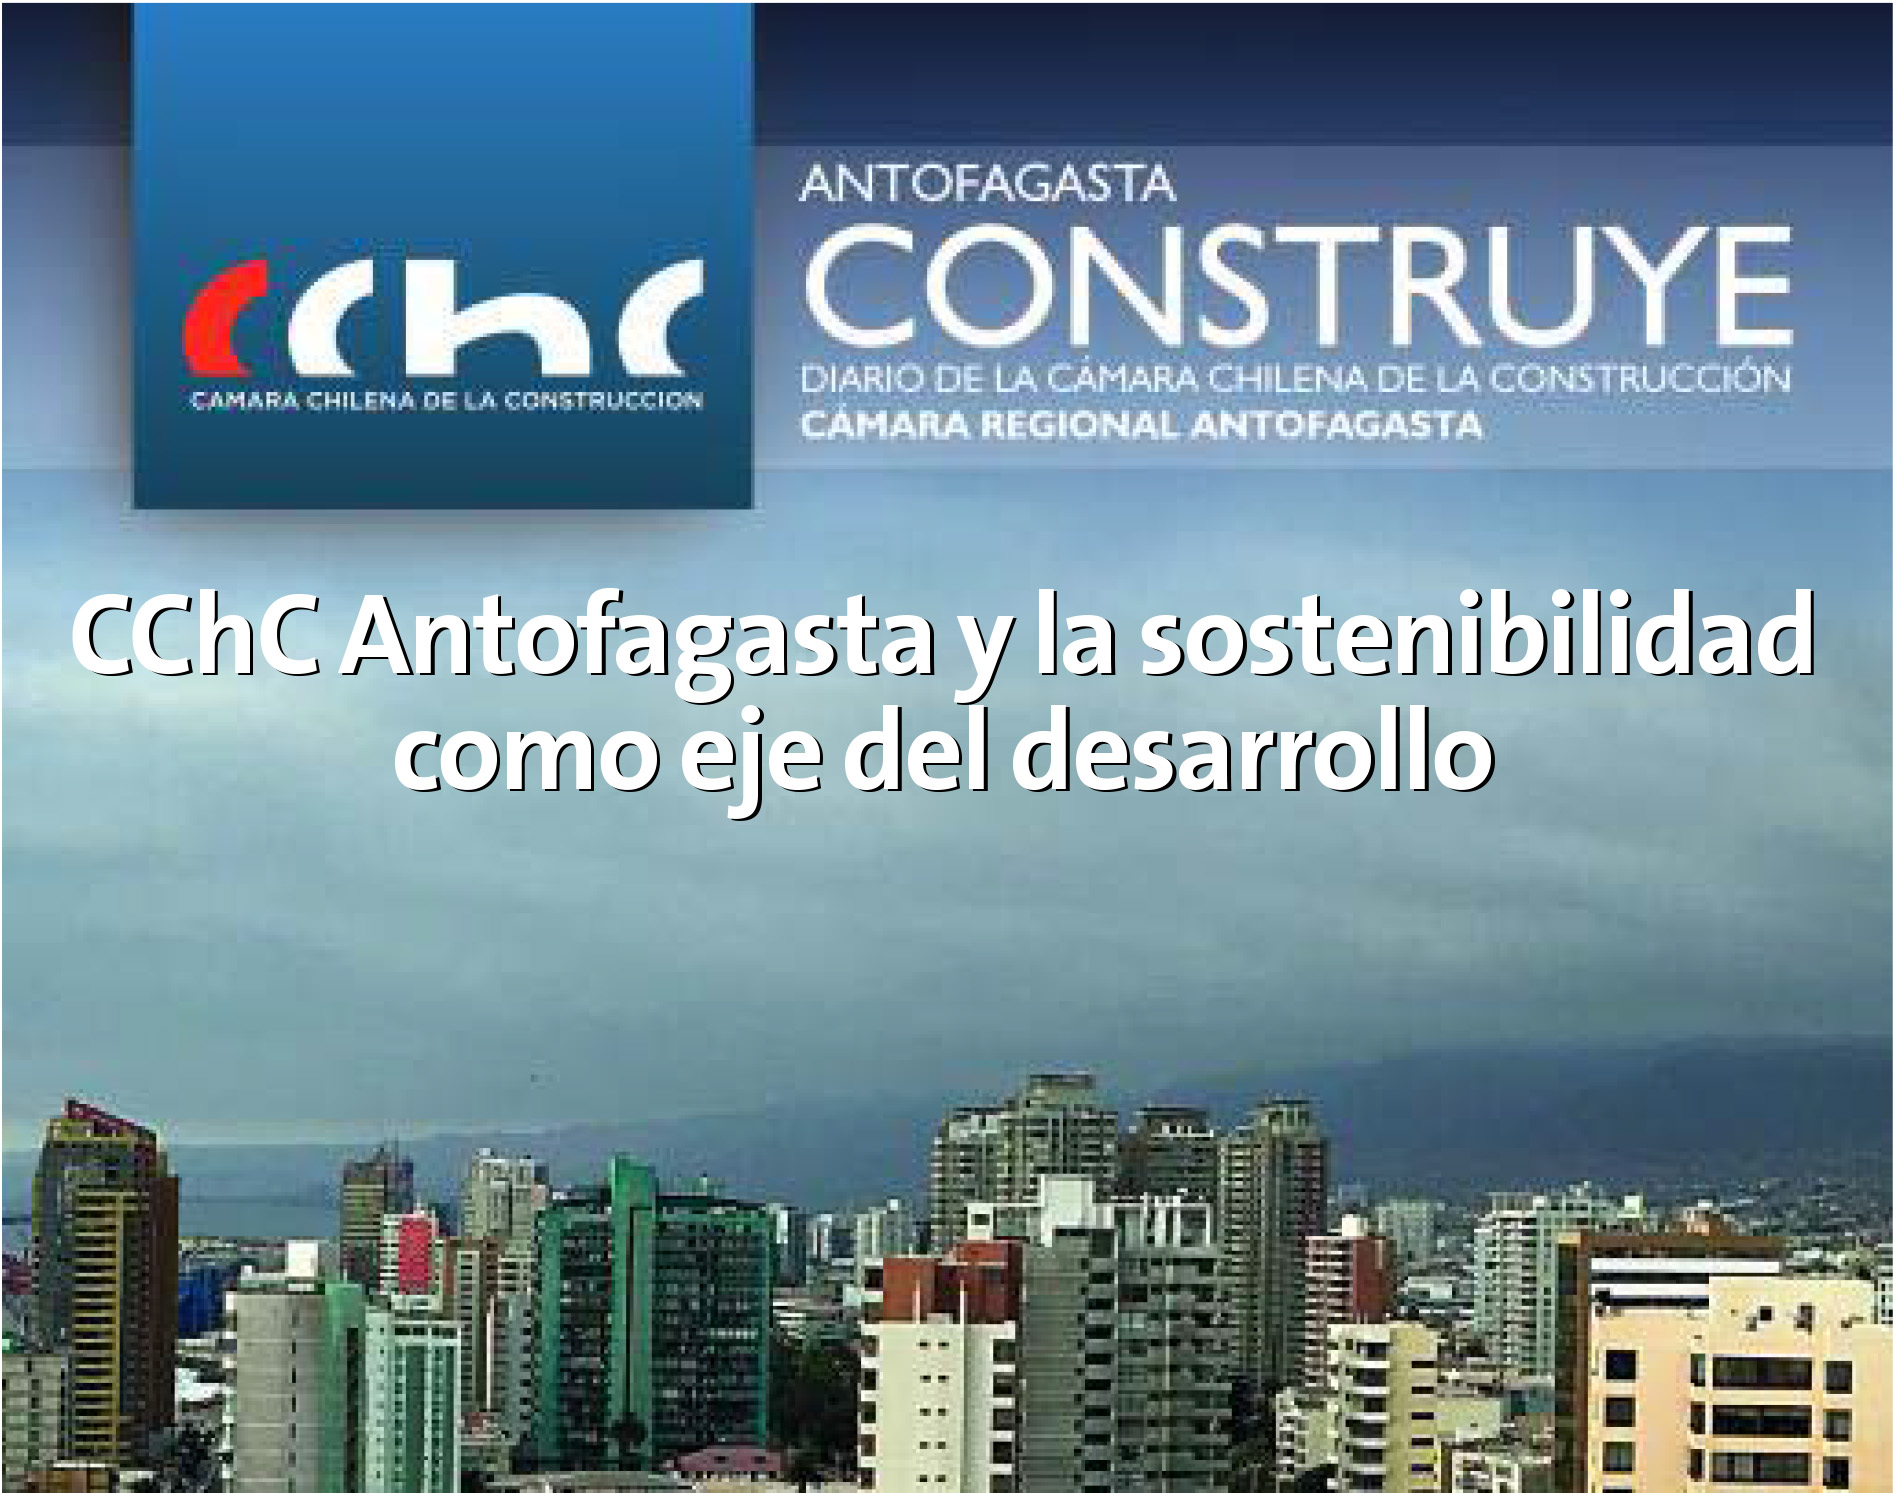 Antofagasta_Construye_sept_2016.jpg